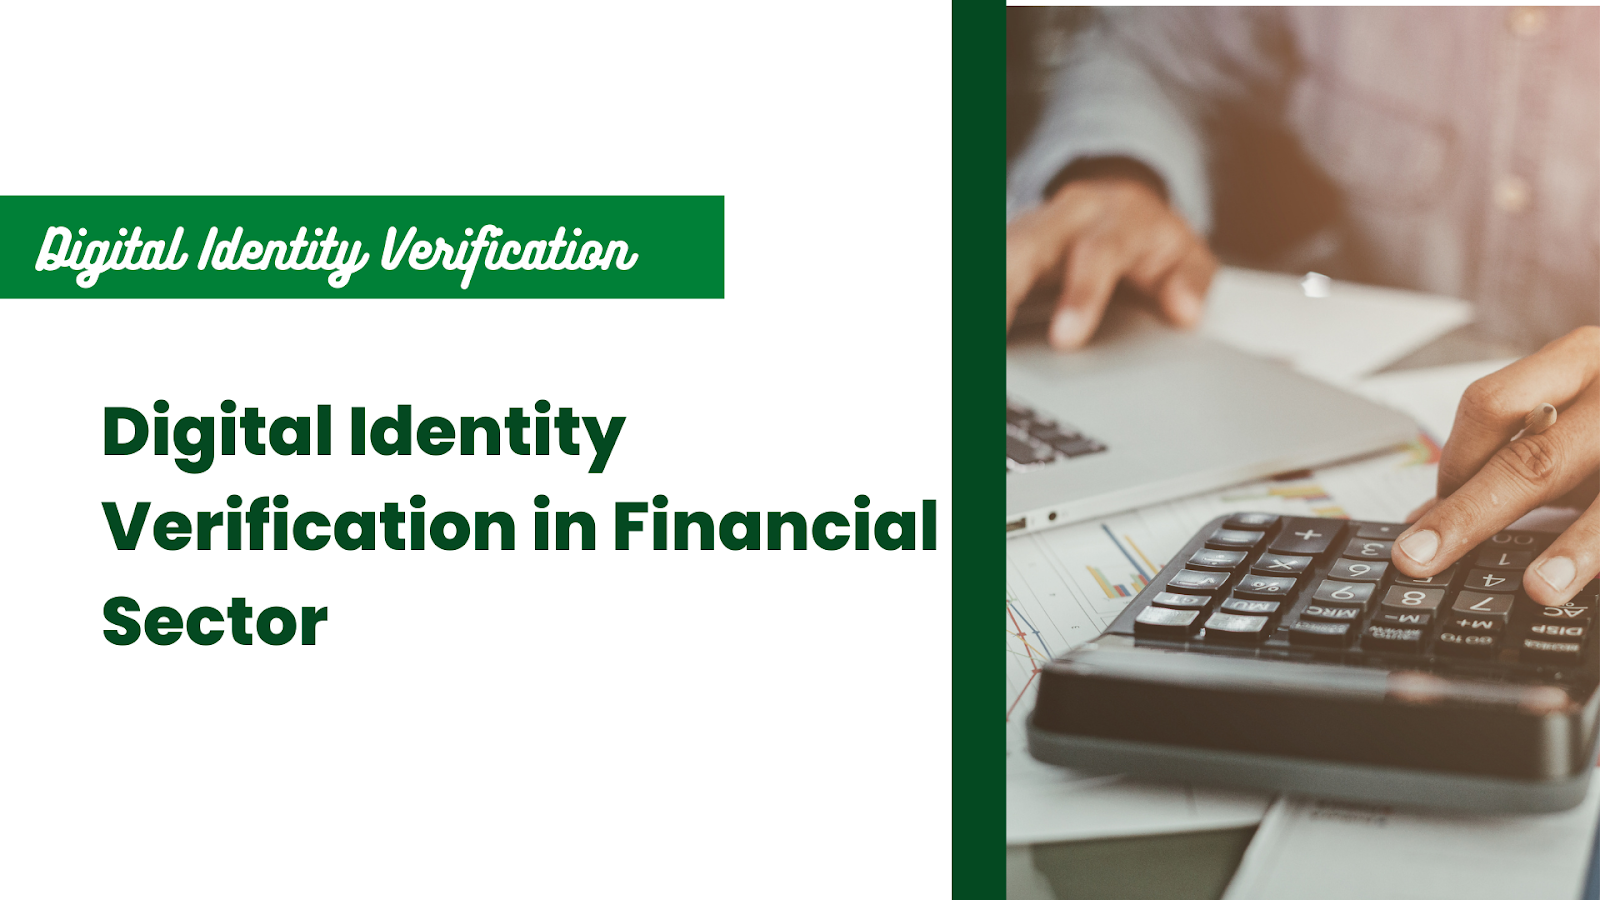 Digital Identity Verification in Financial Sector